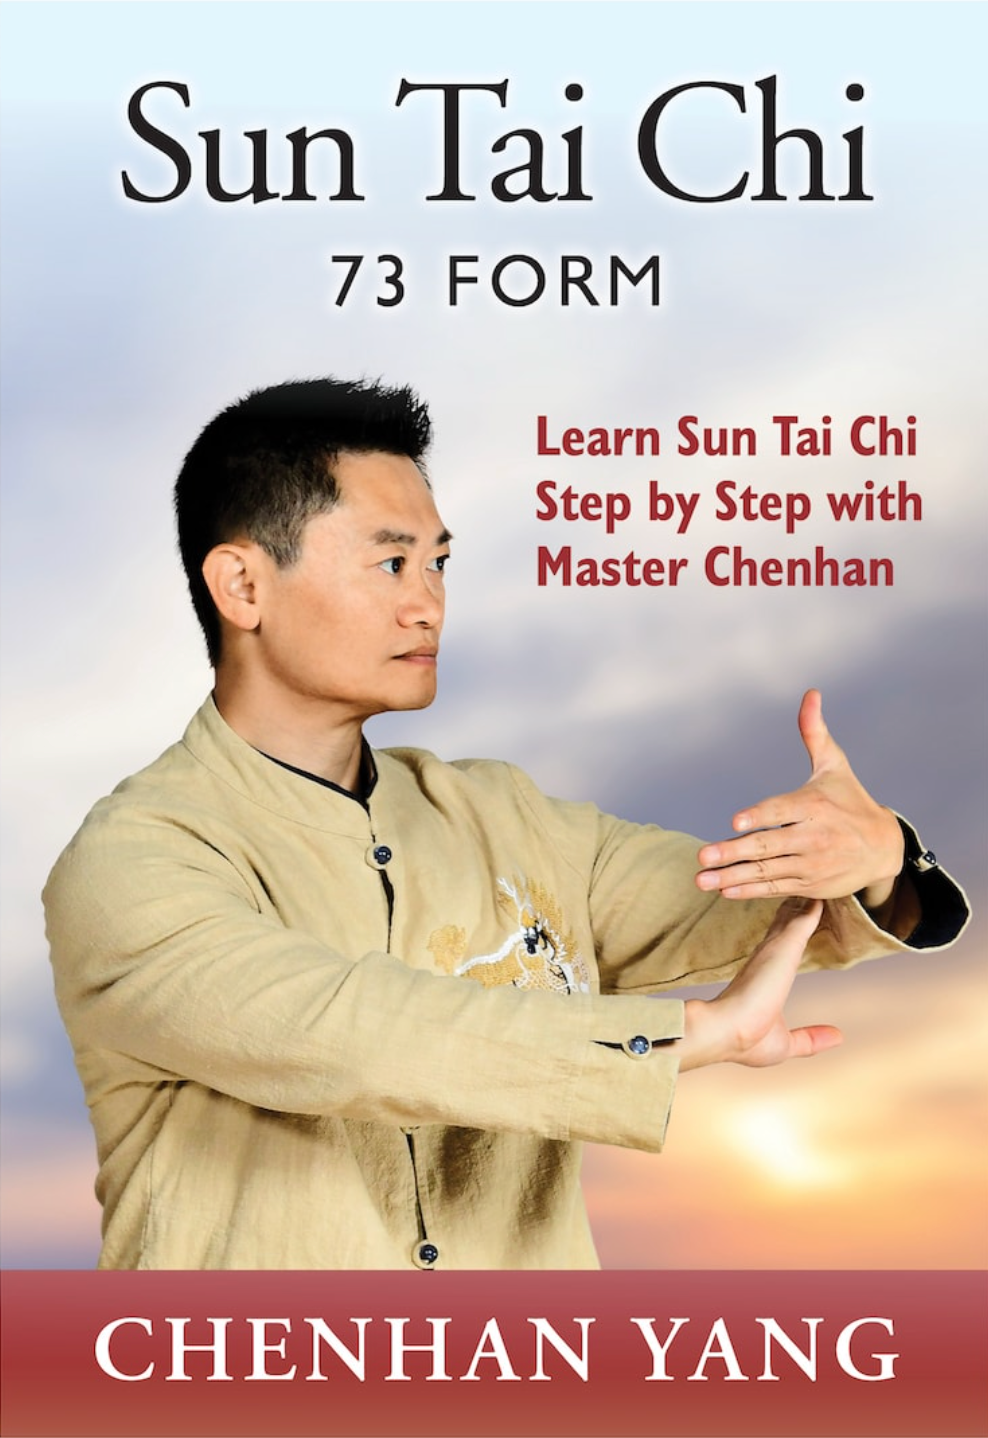 Sun Tai Chi DVD by Chenhan Yang - Budovideos Inc